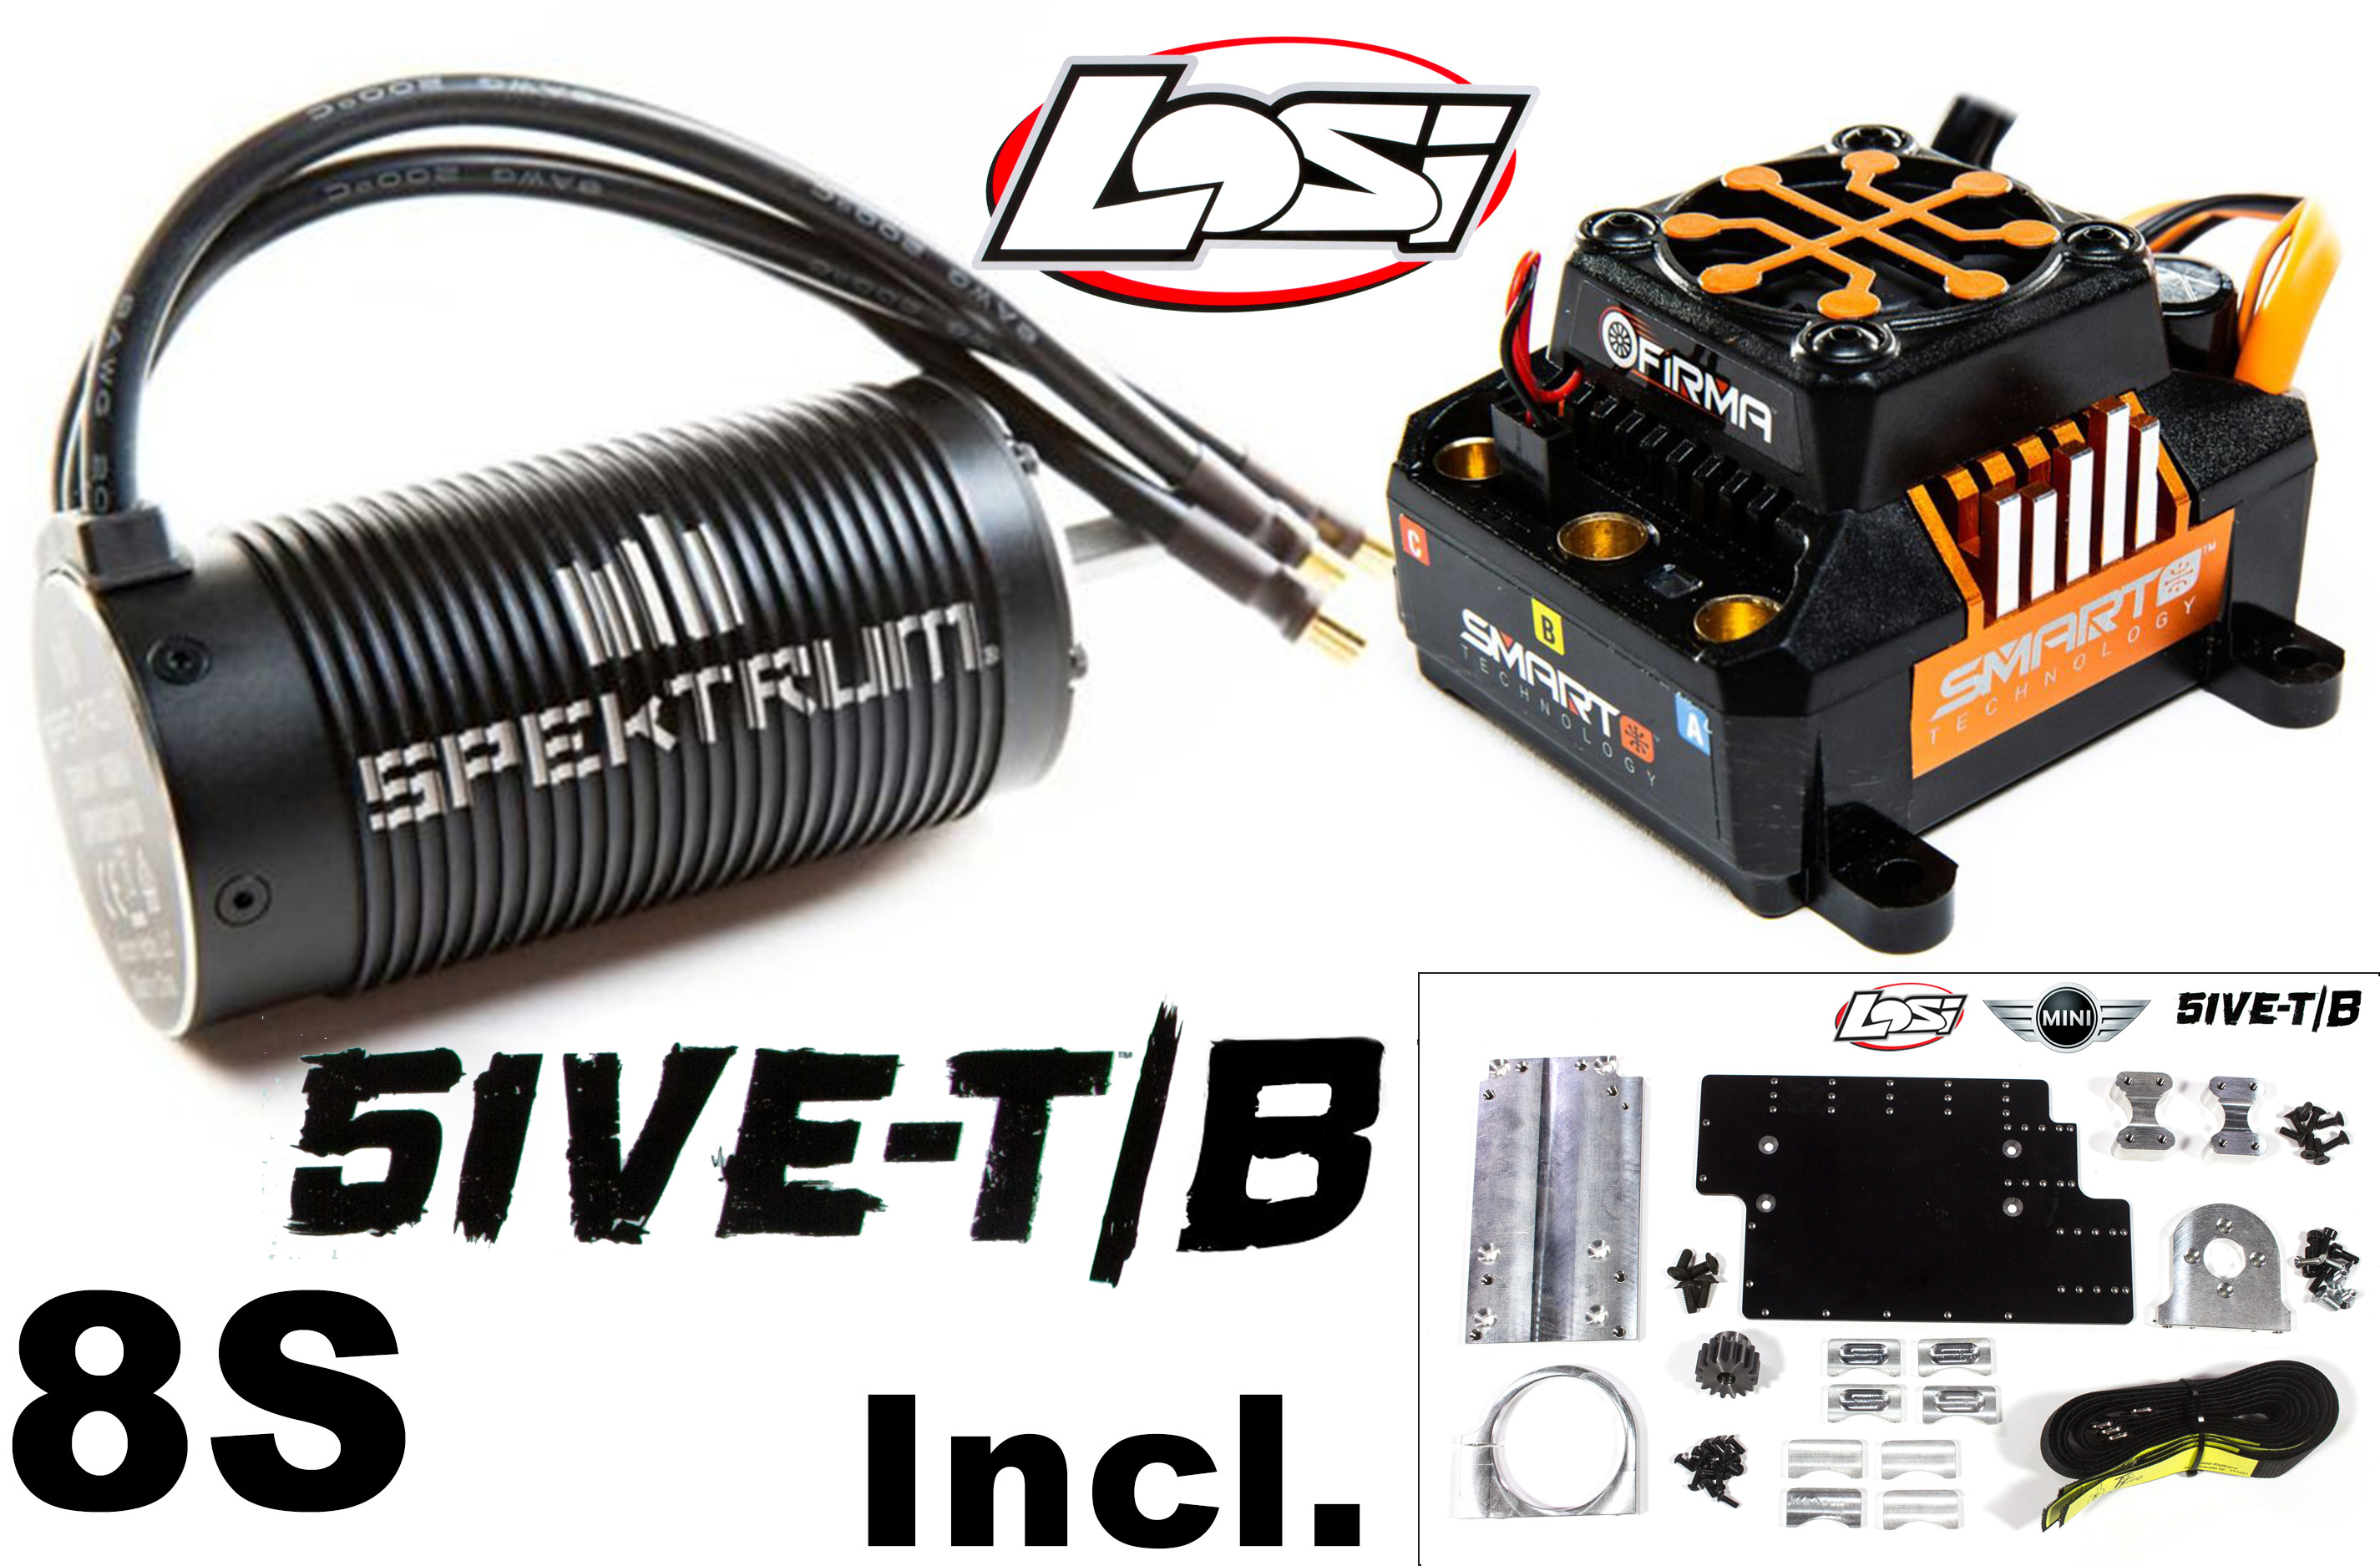 TT5013 Top Tuning komplettes Einbauset für Losi 5iveT/B und Mini mit original Losi Spektrum Motor / Regler